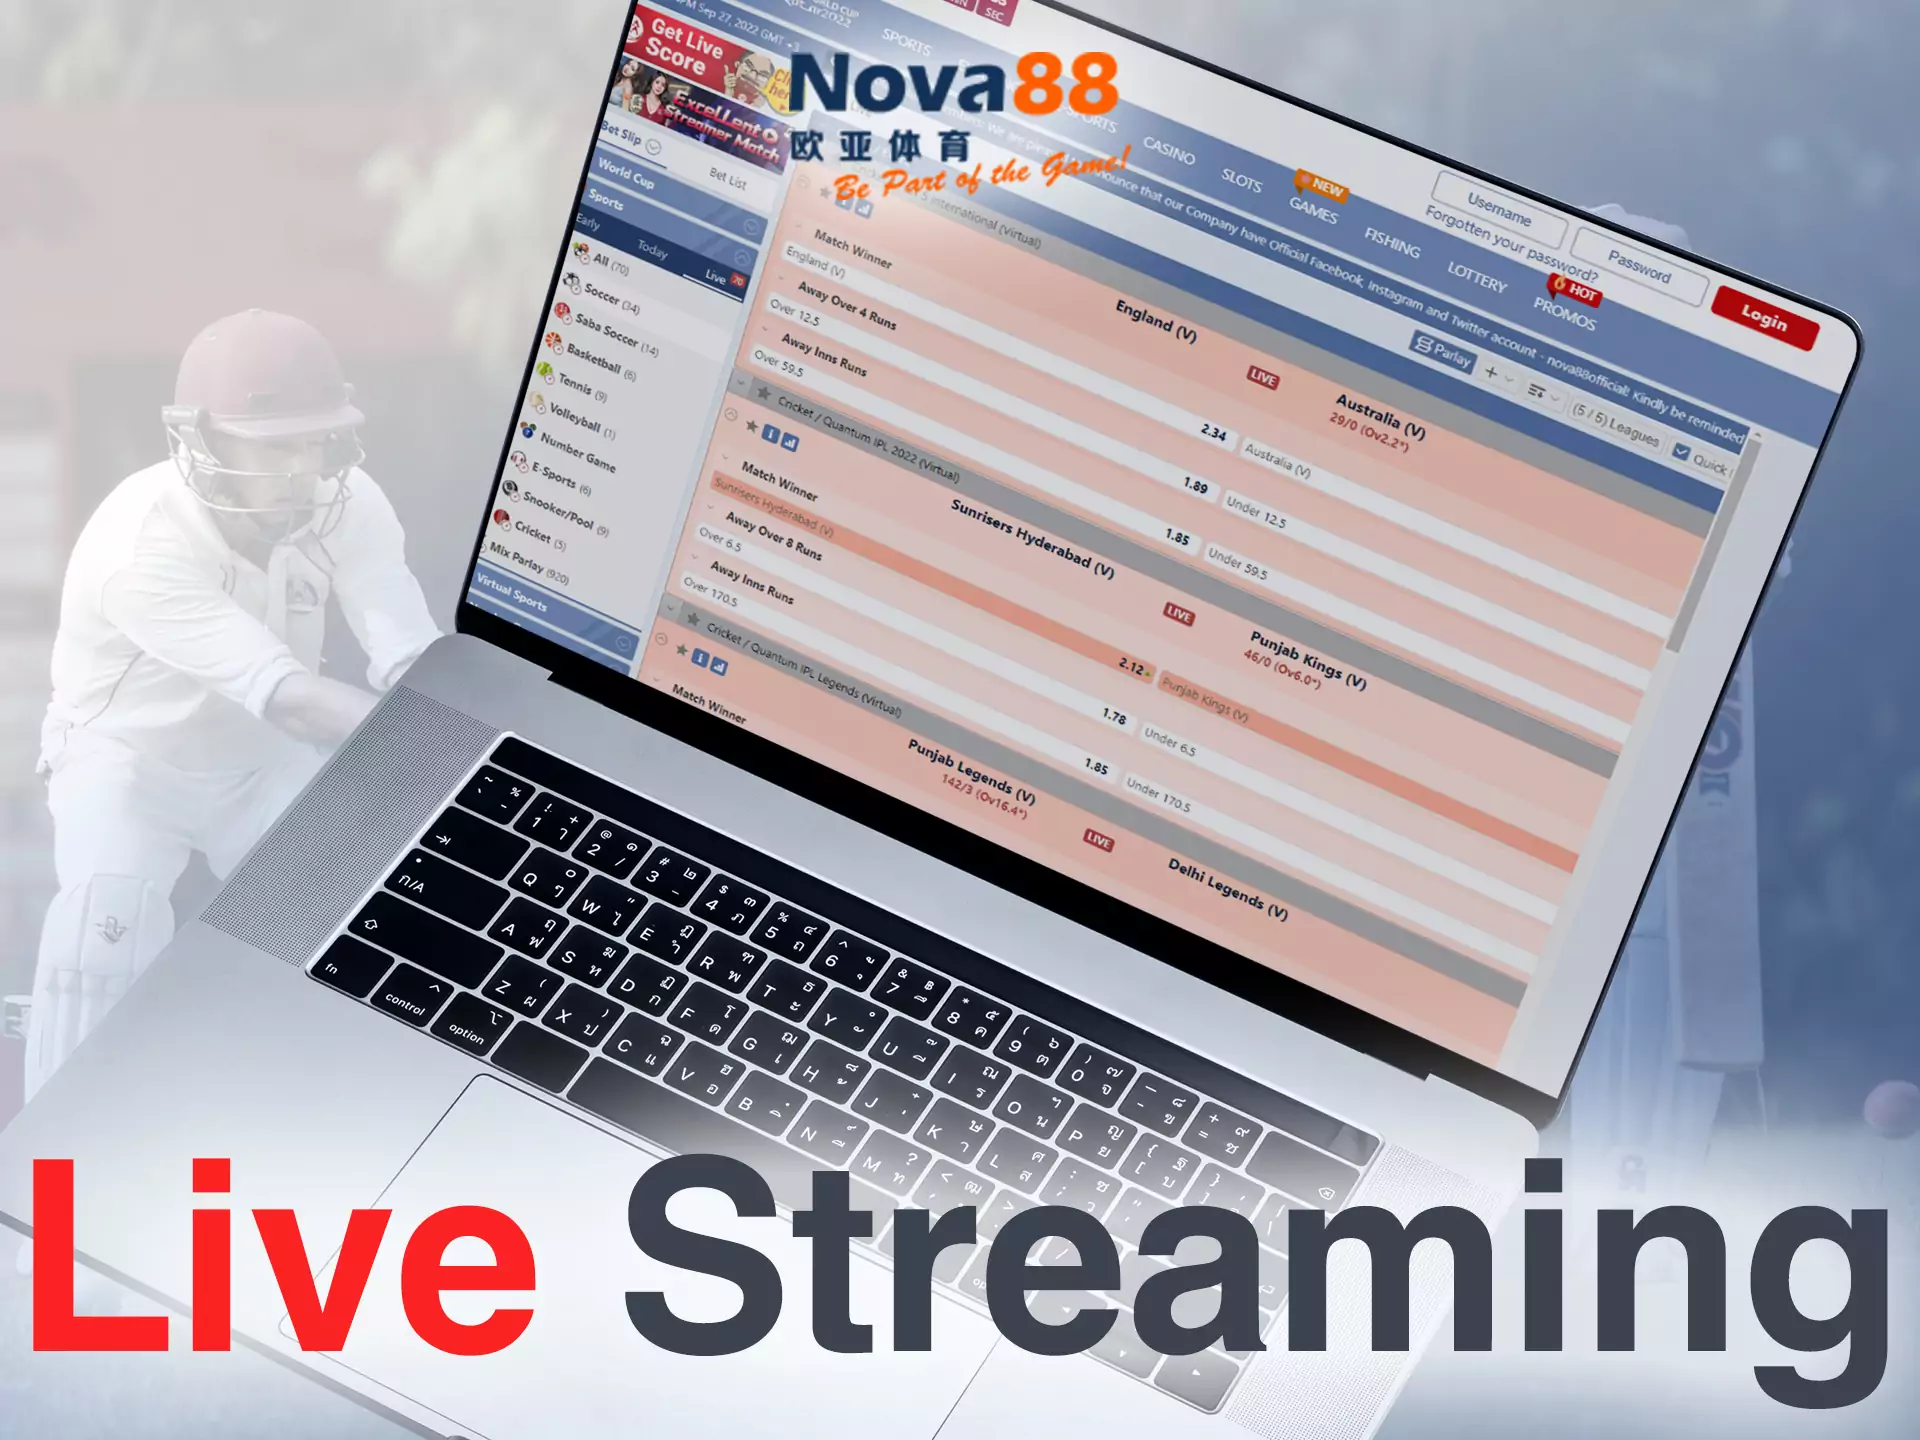 Follow the events online on the Nova88 website.